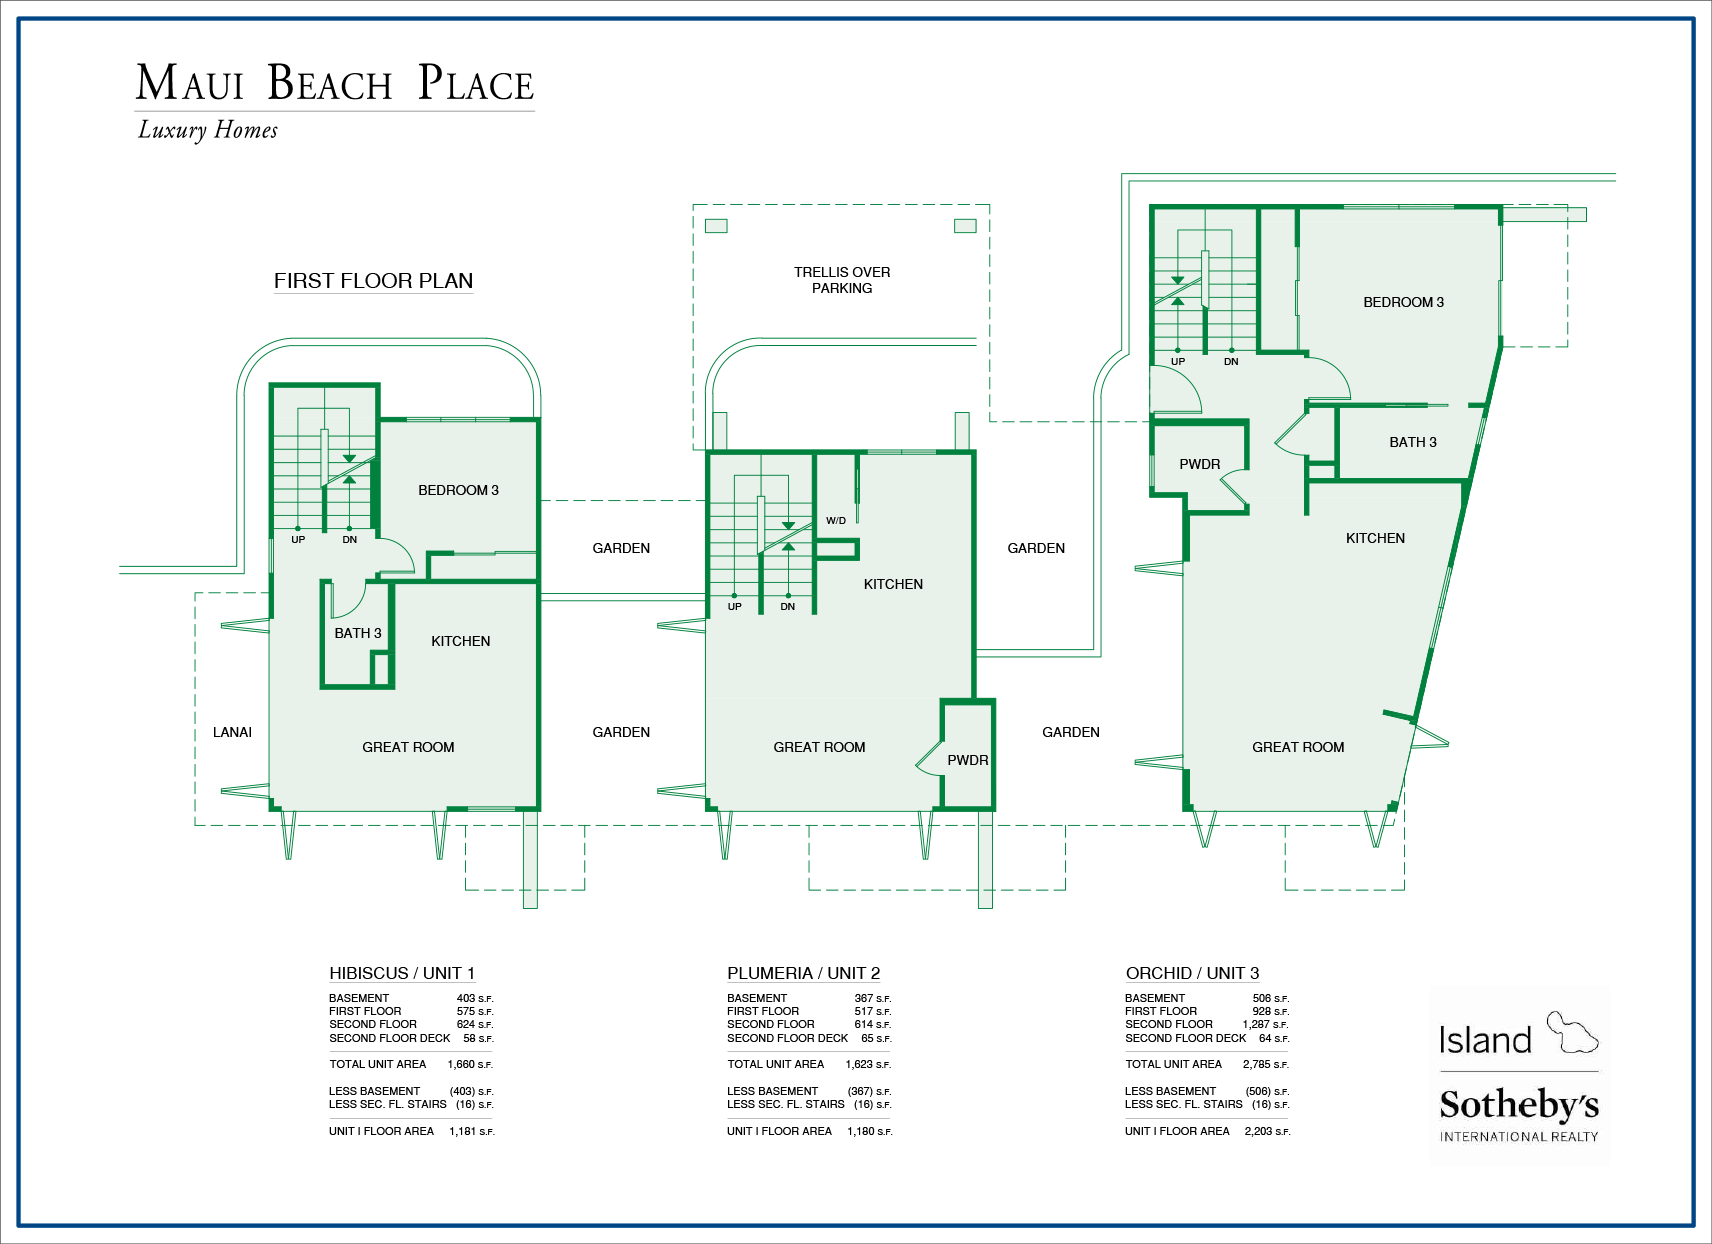 Maui Beach Place Site Plan Ground Level